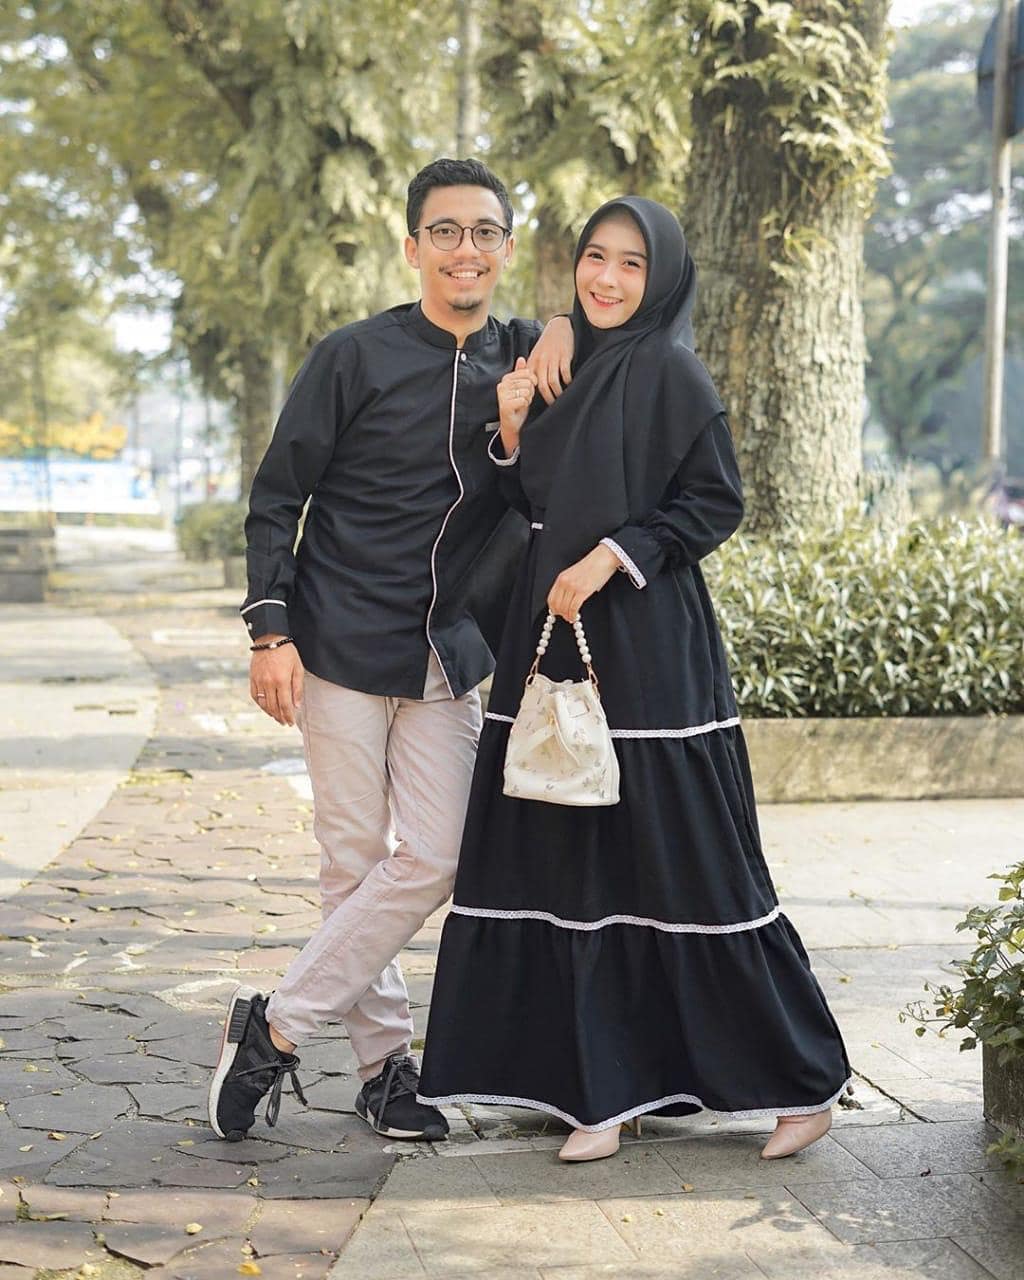 Pittara Couple Baju Couple Pasangan Baju Pasangan Muslim Baju Couple Pasangan Kondangan Baju Couple Terbaru 2020 Baju Pasangan Pacar Baju Pasangan Suami Istri Baju Wanita Baju Pria Kemeja